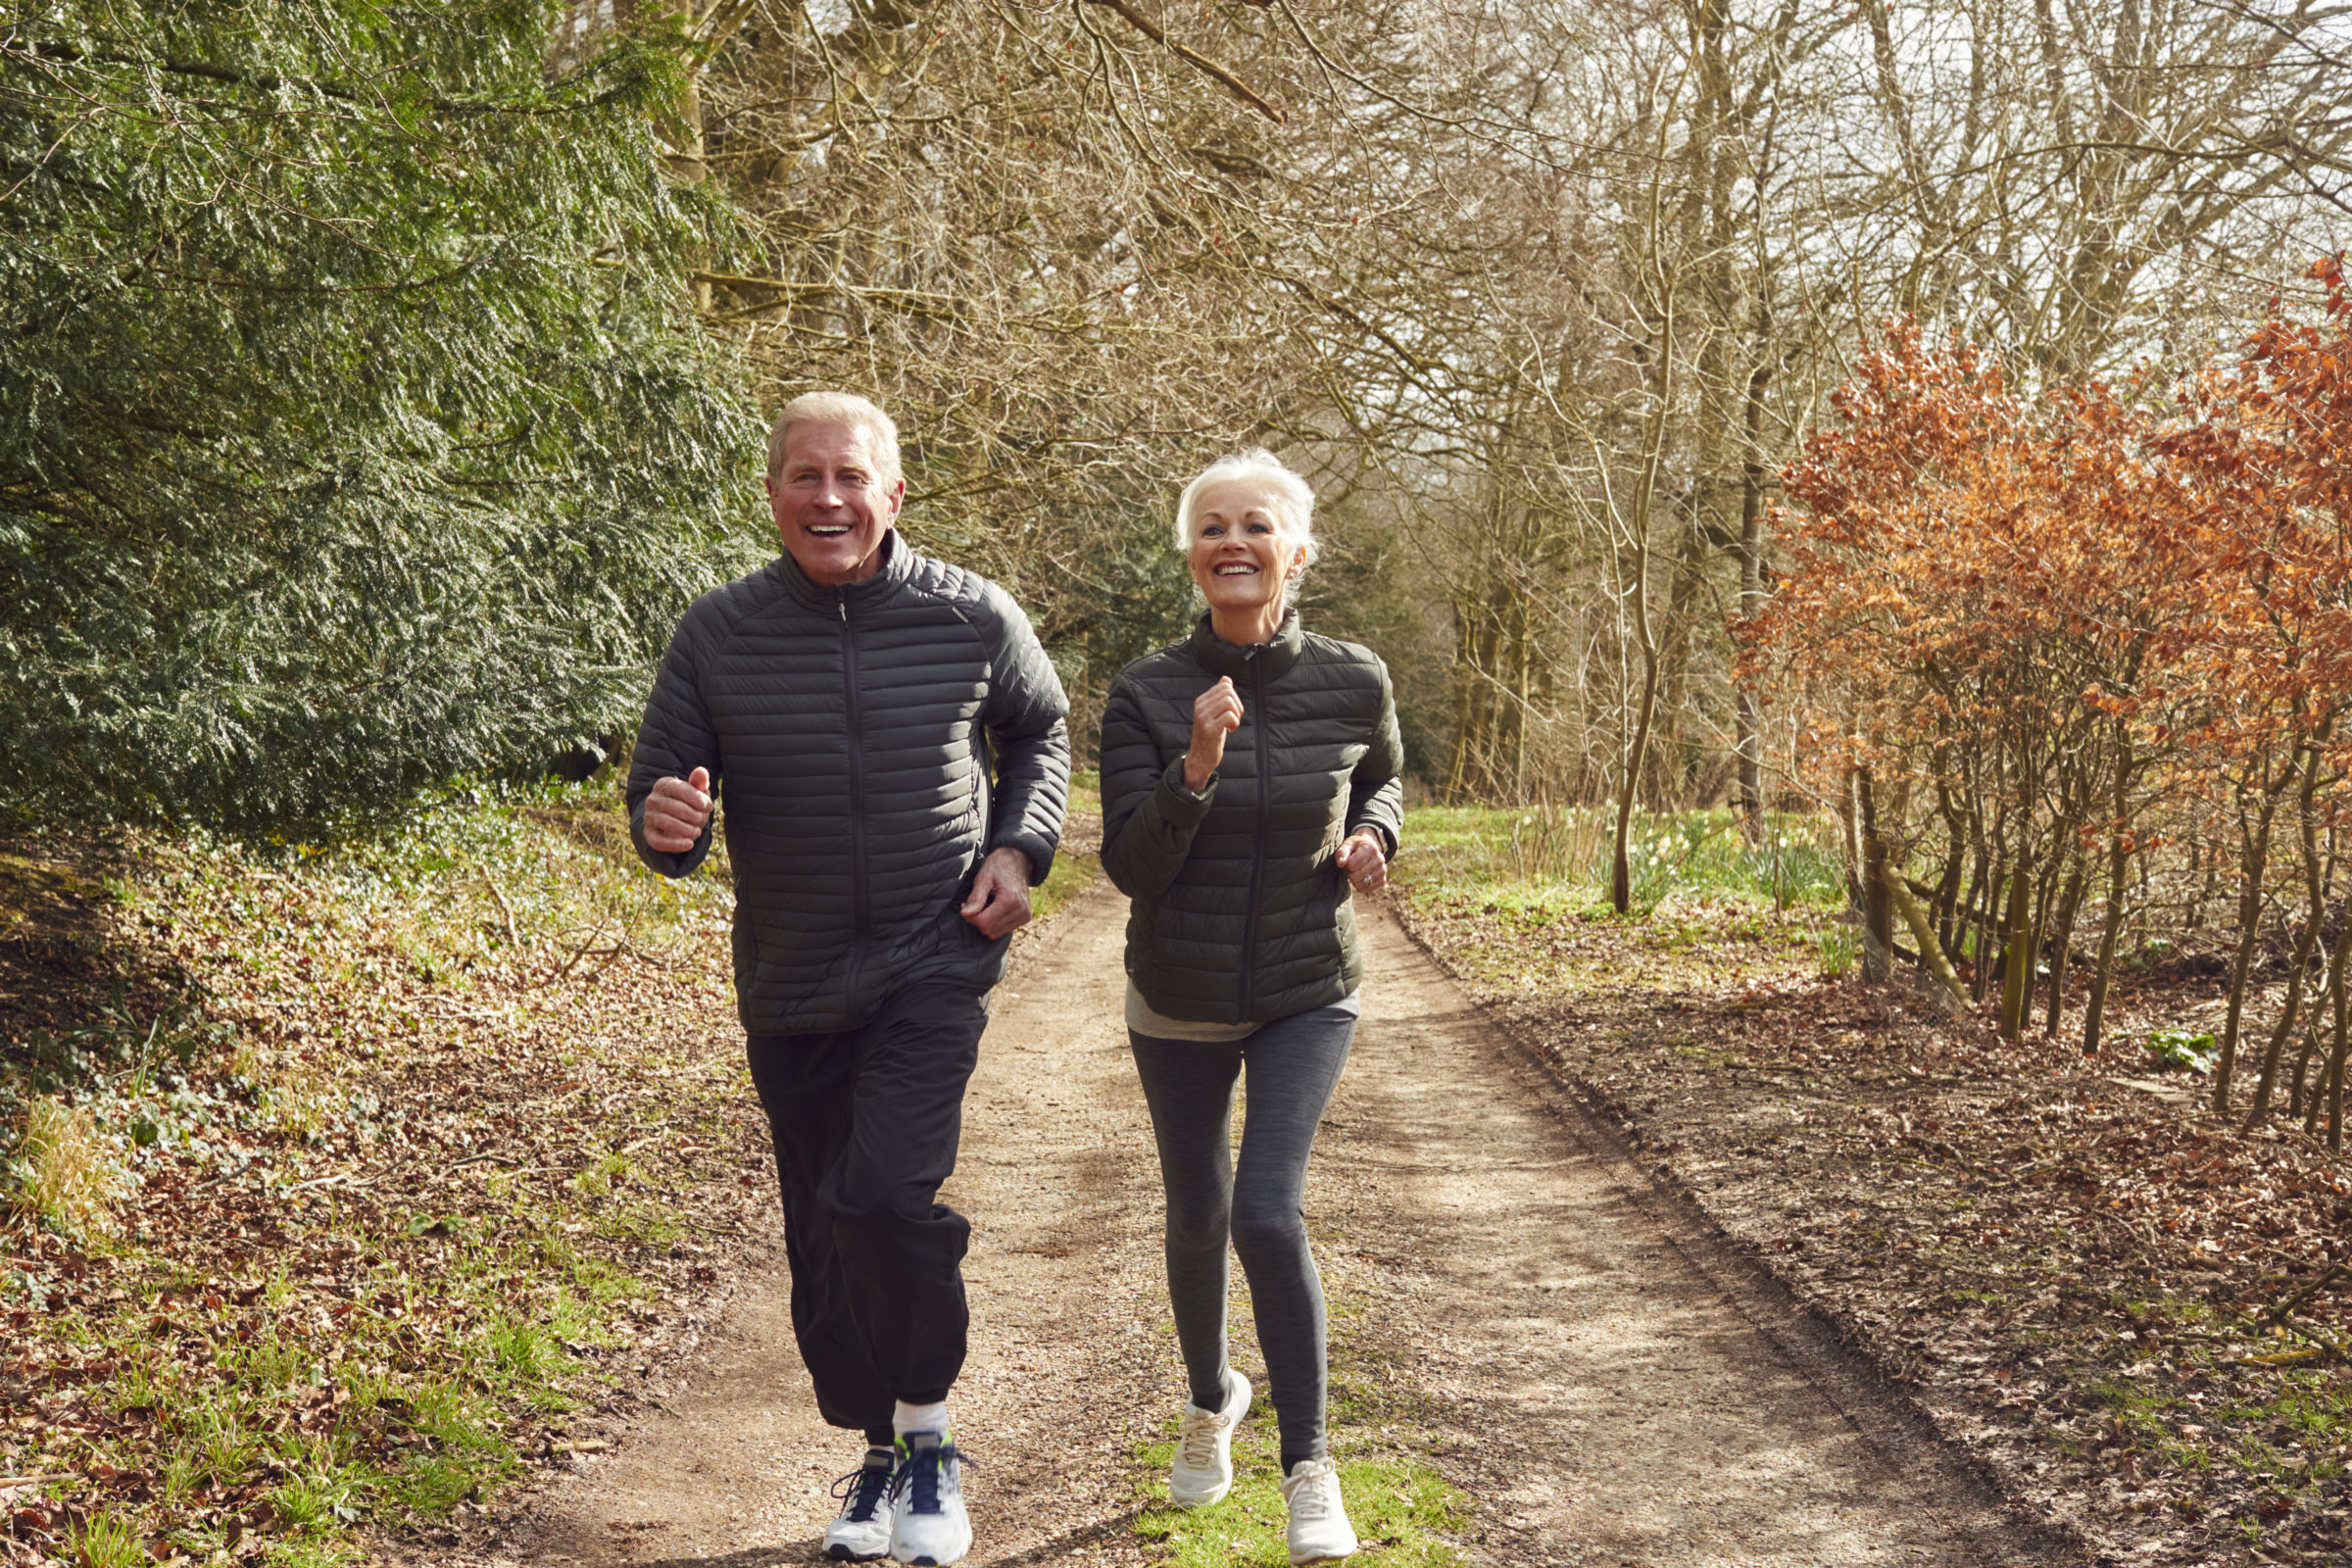 senior couple exercising in autumn countryside dur 2021 08 29 21 52 06 utc